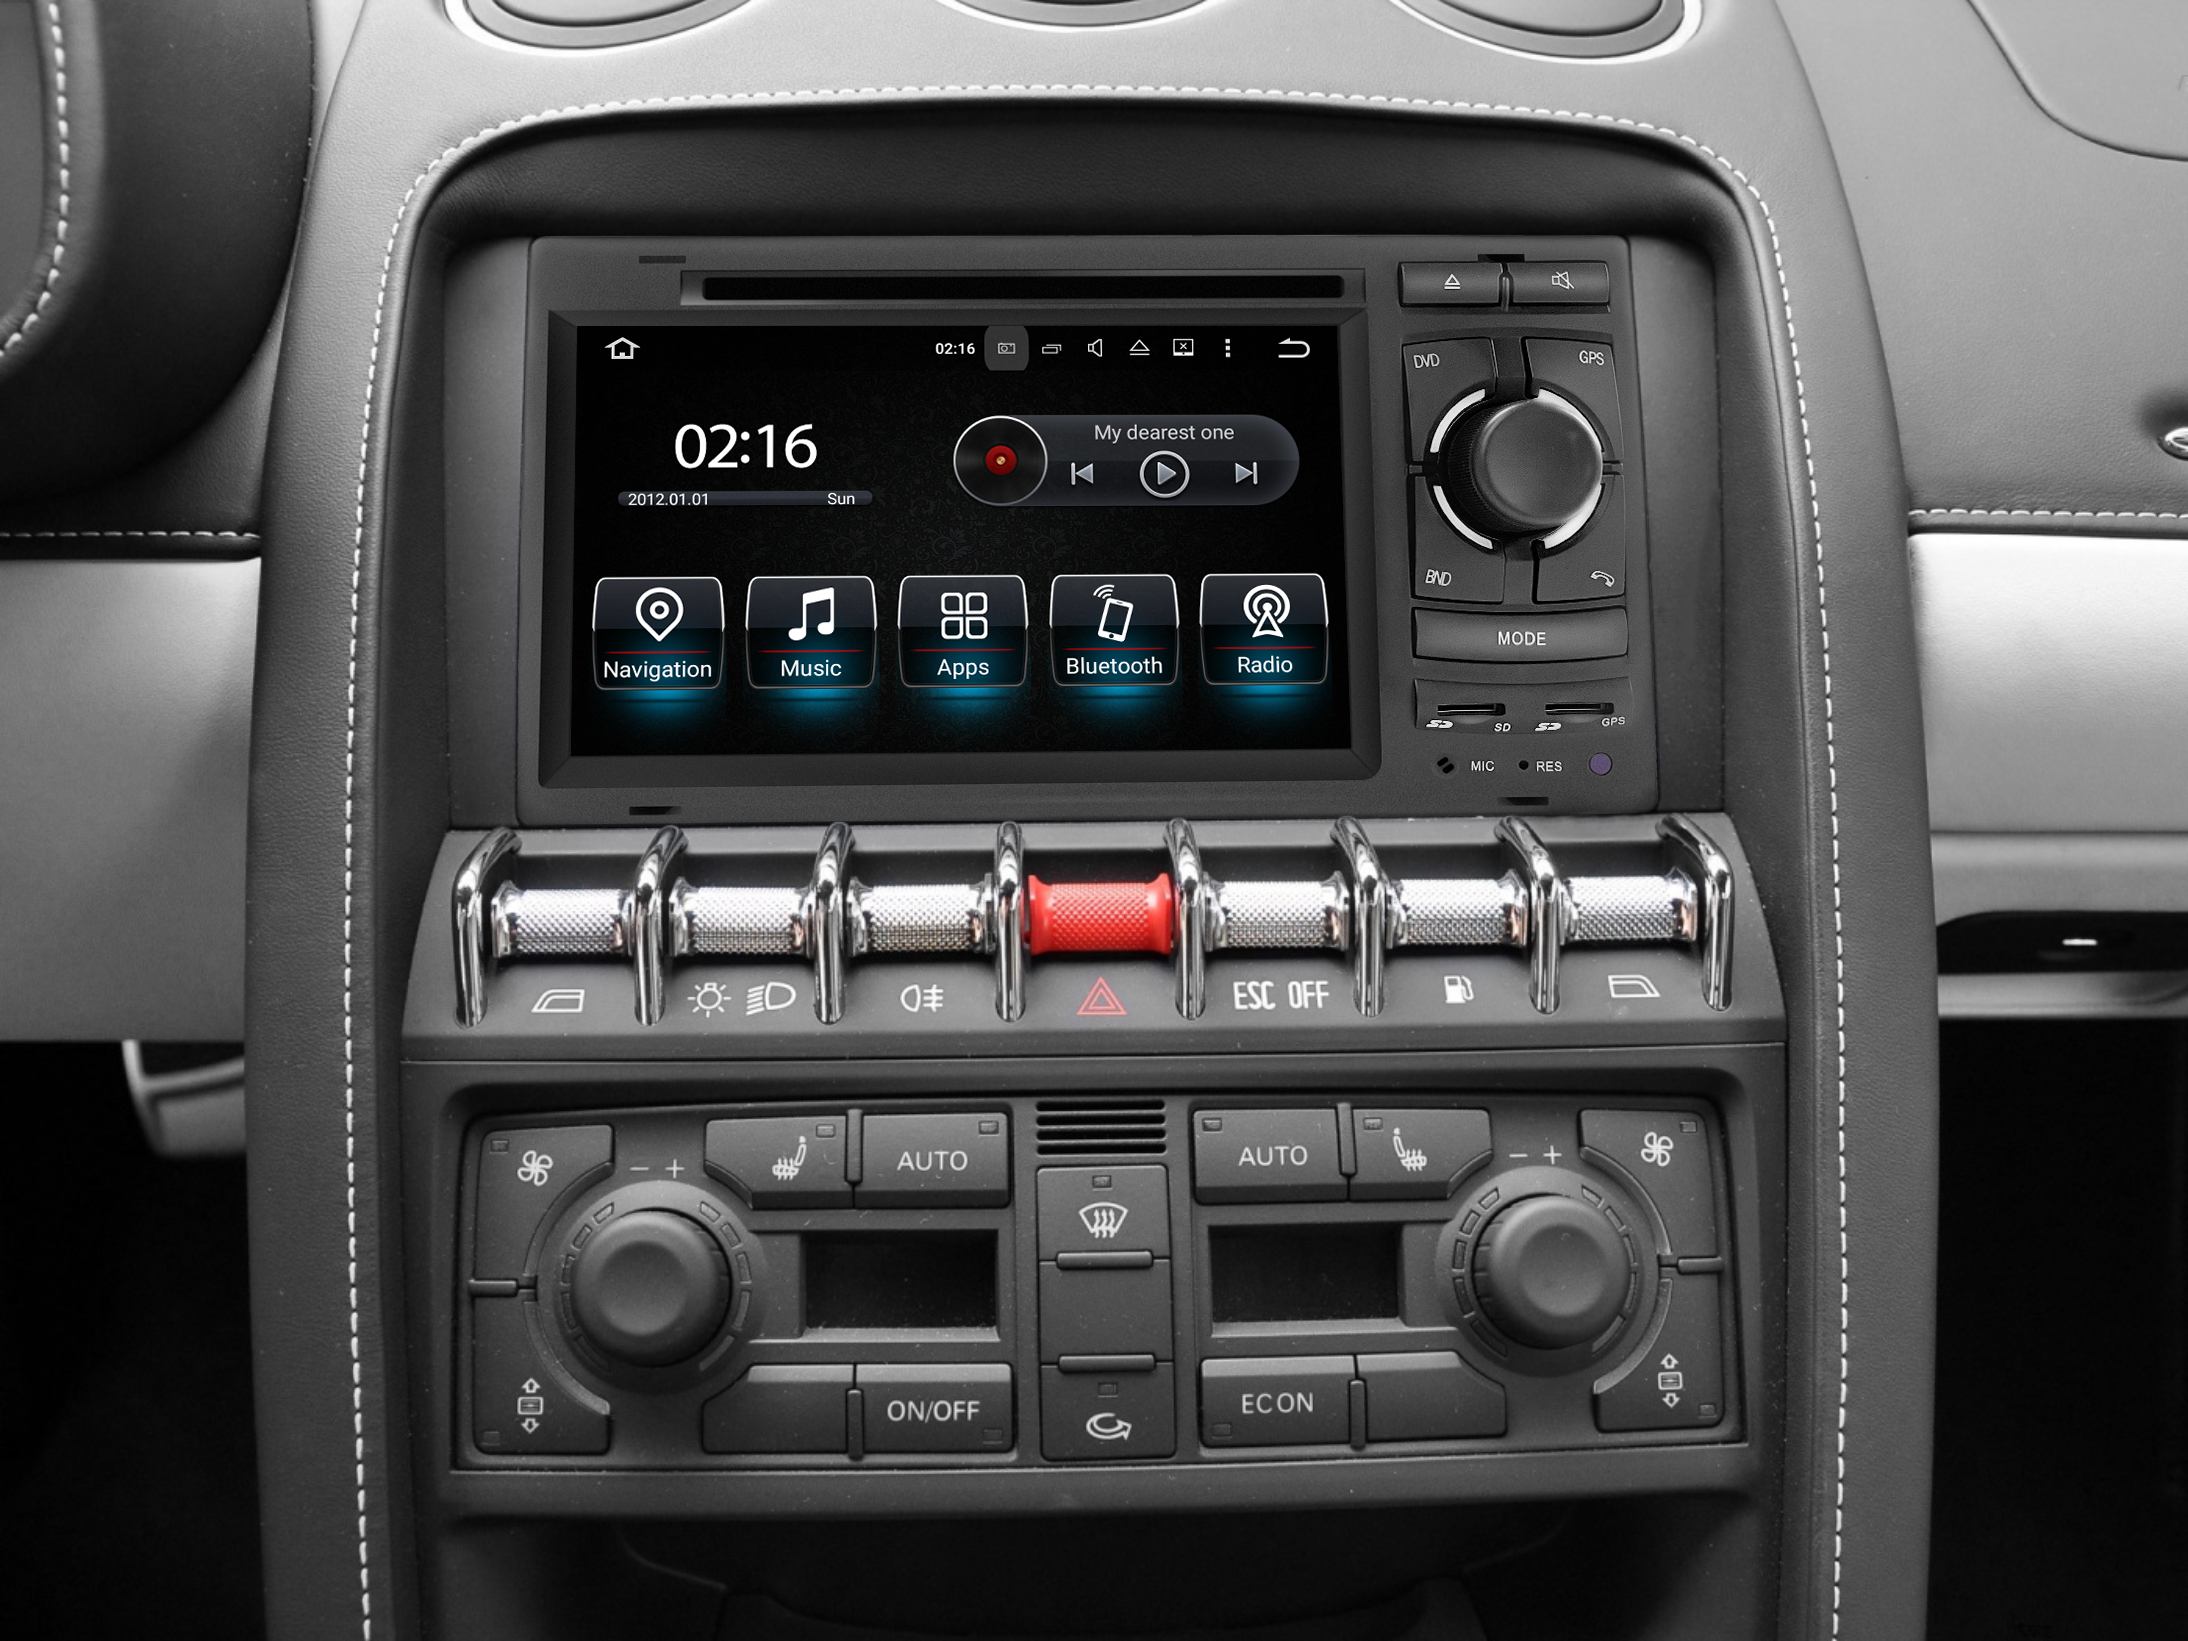 Aftermarket Navigation Lamborghini Gallardo Radio DVD Wireless Apple CarPlay FullScree Android Auto Screen Mirroring Android System